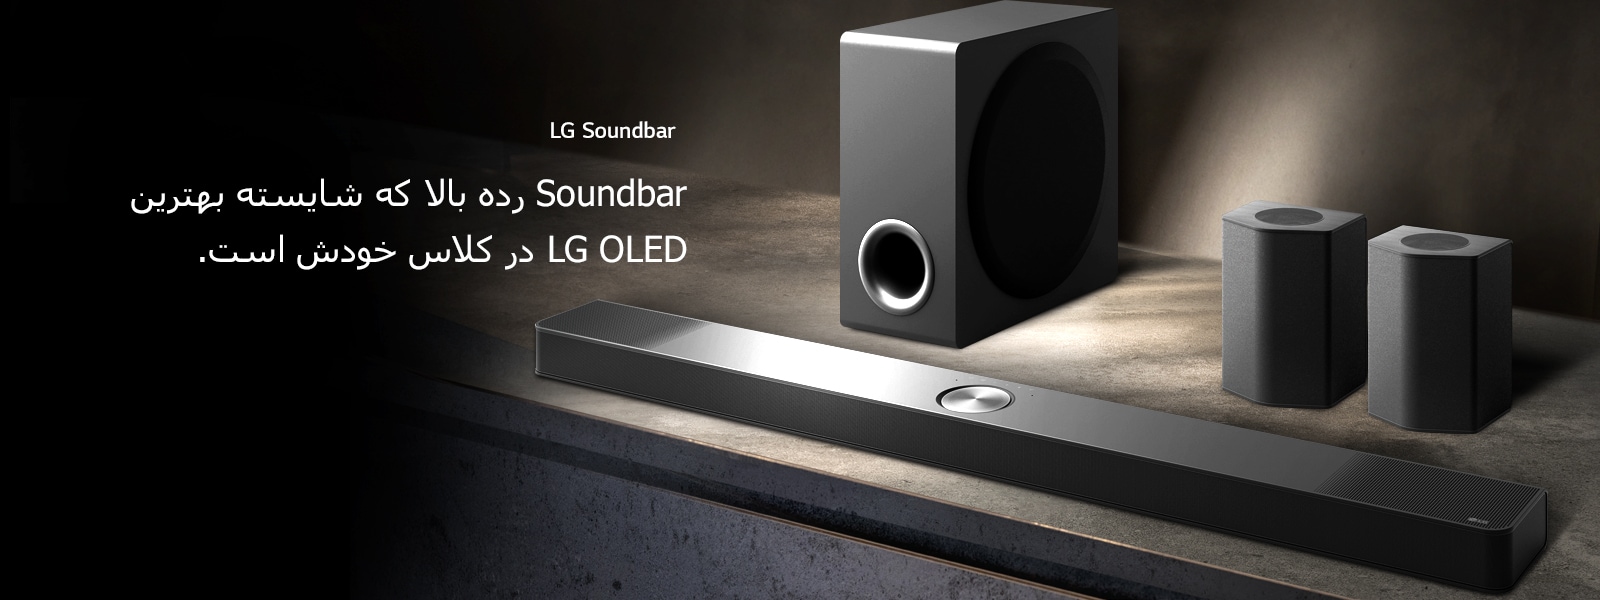 LG Soundbar، بلندگوهای پشت، و ساب‌ووفور در نمایی زاویه‌دار روی یک قفسه چوبی قهوه‌ای در اتاقی سیاه و مملو از تاریکی قرار دارند که نور تنها روی سیستم صوتی را روشن کرده است.